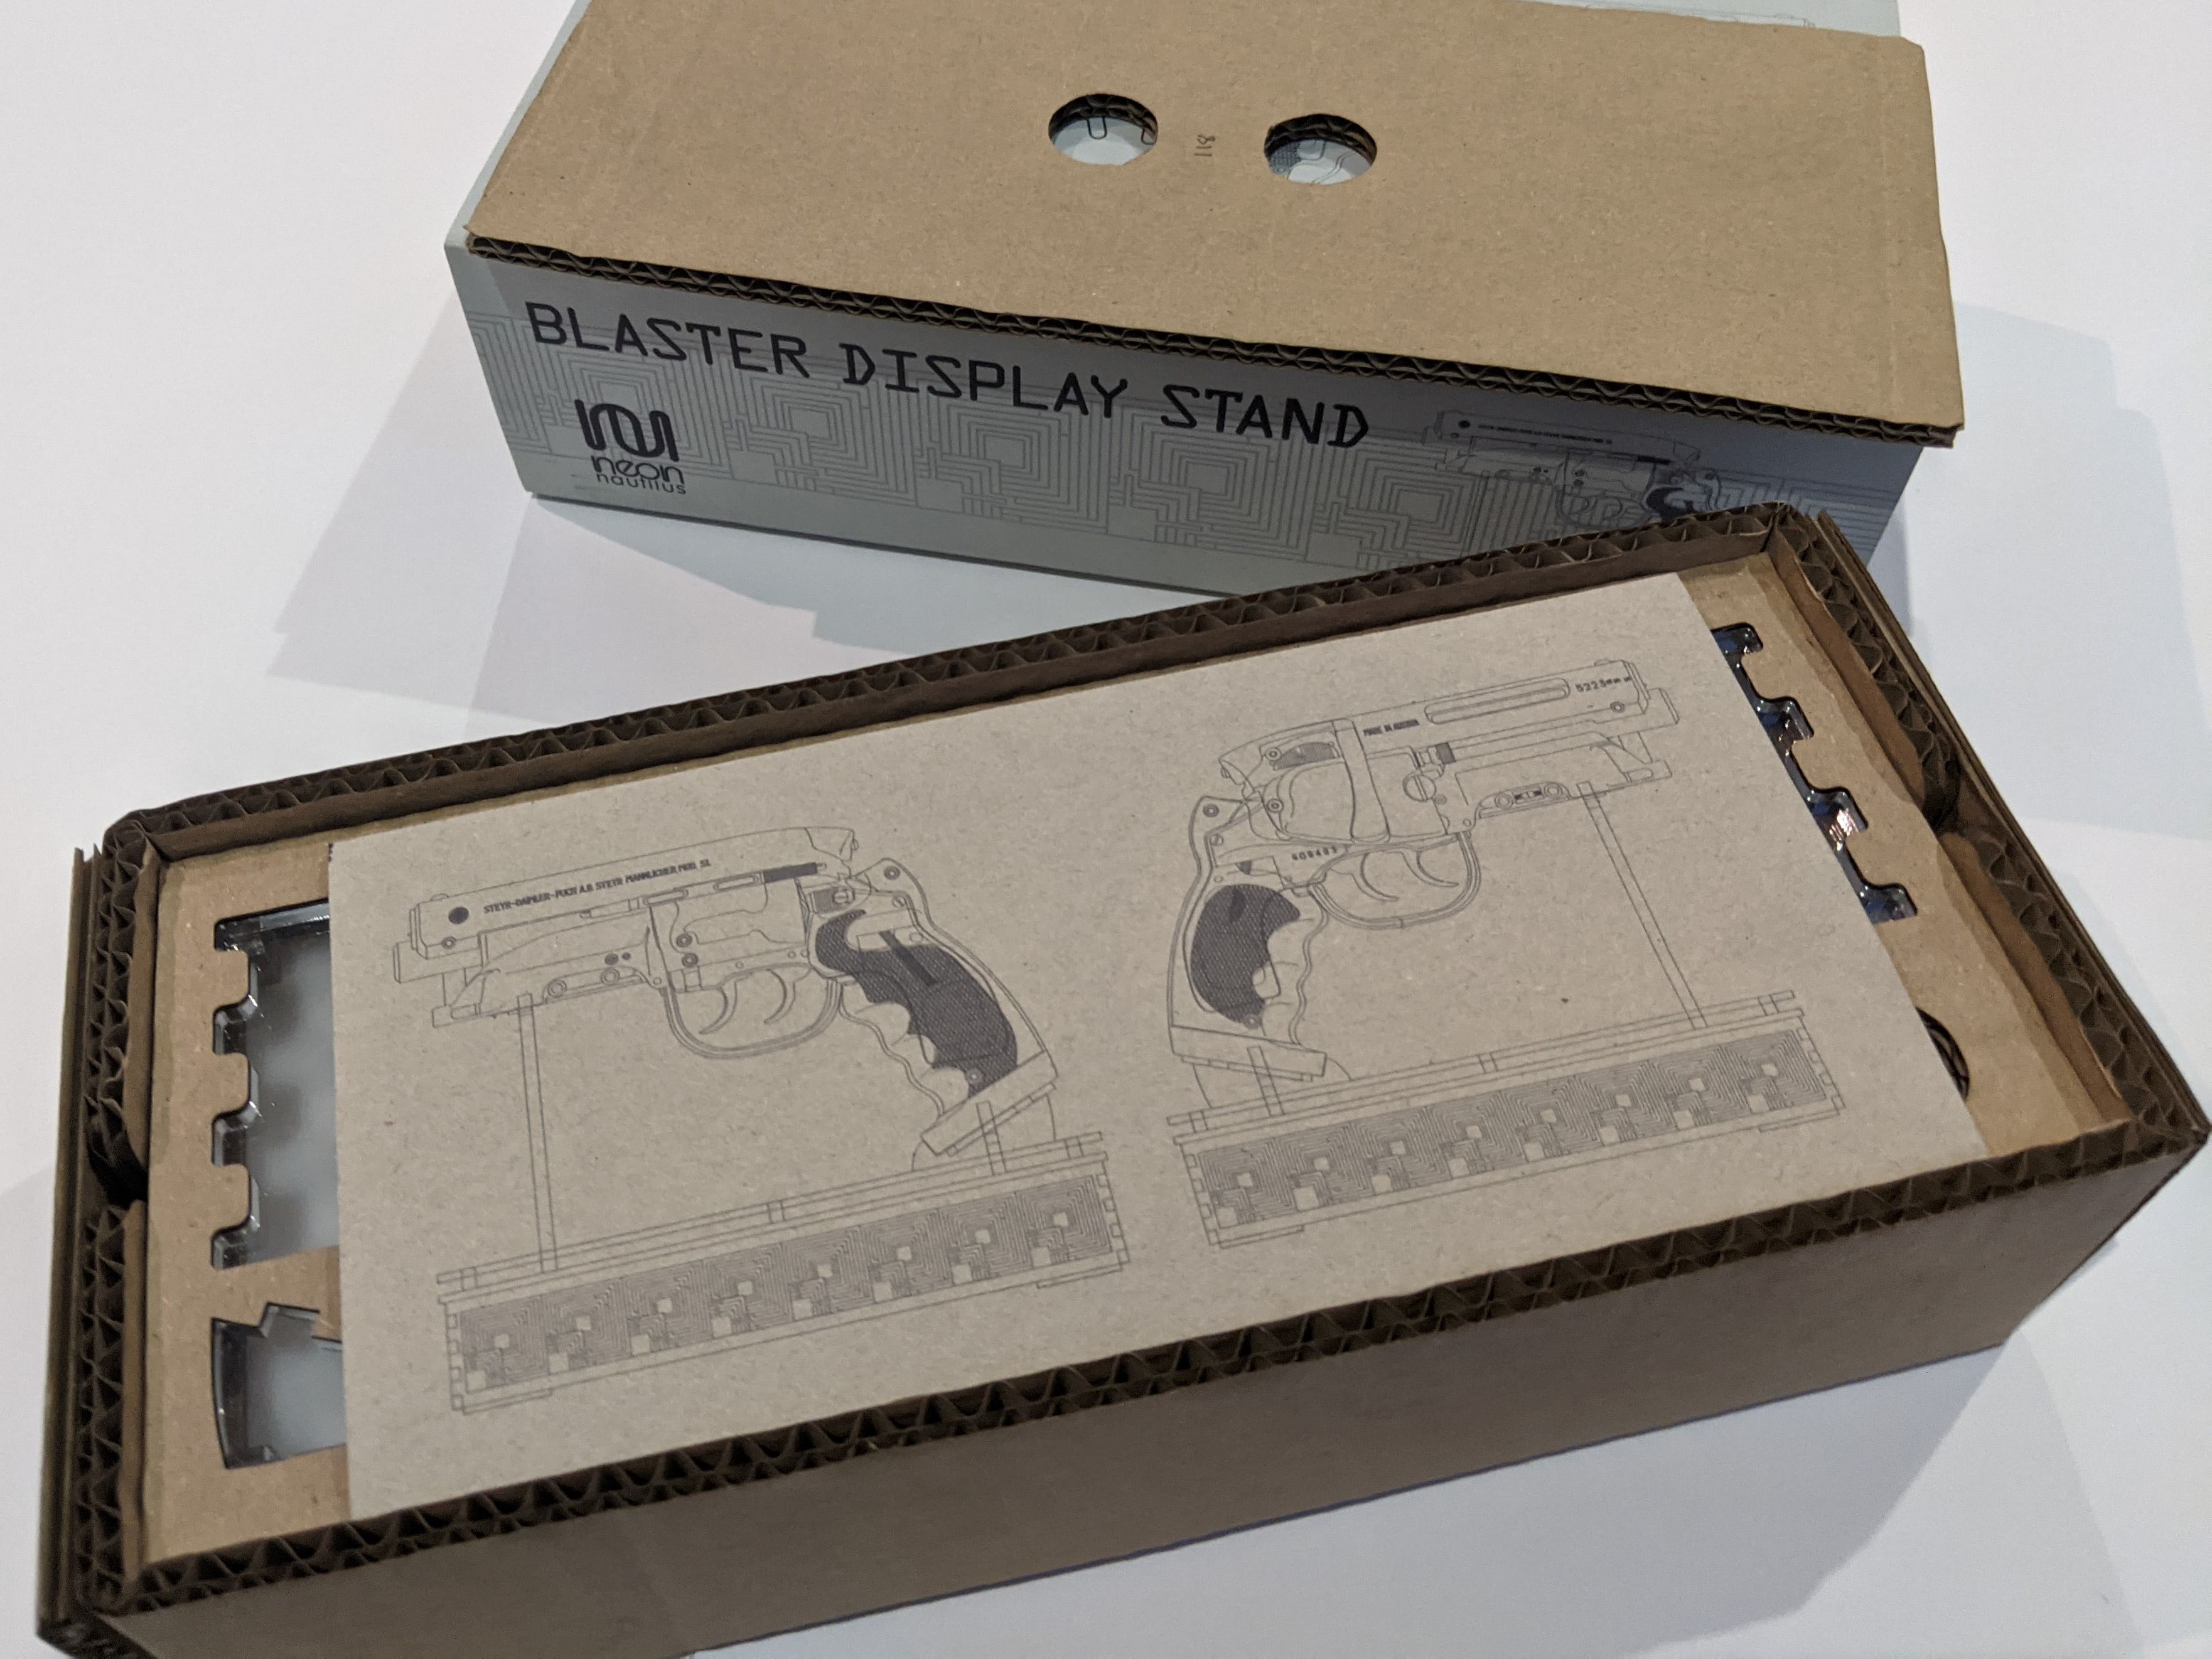 Neon Nautilus' Blade Runner Blaster Stand - Packaging Mockup